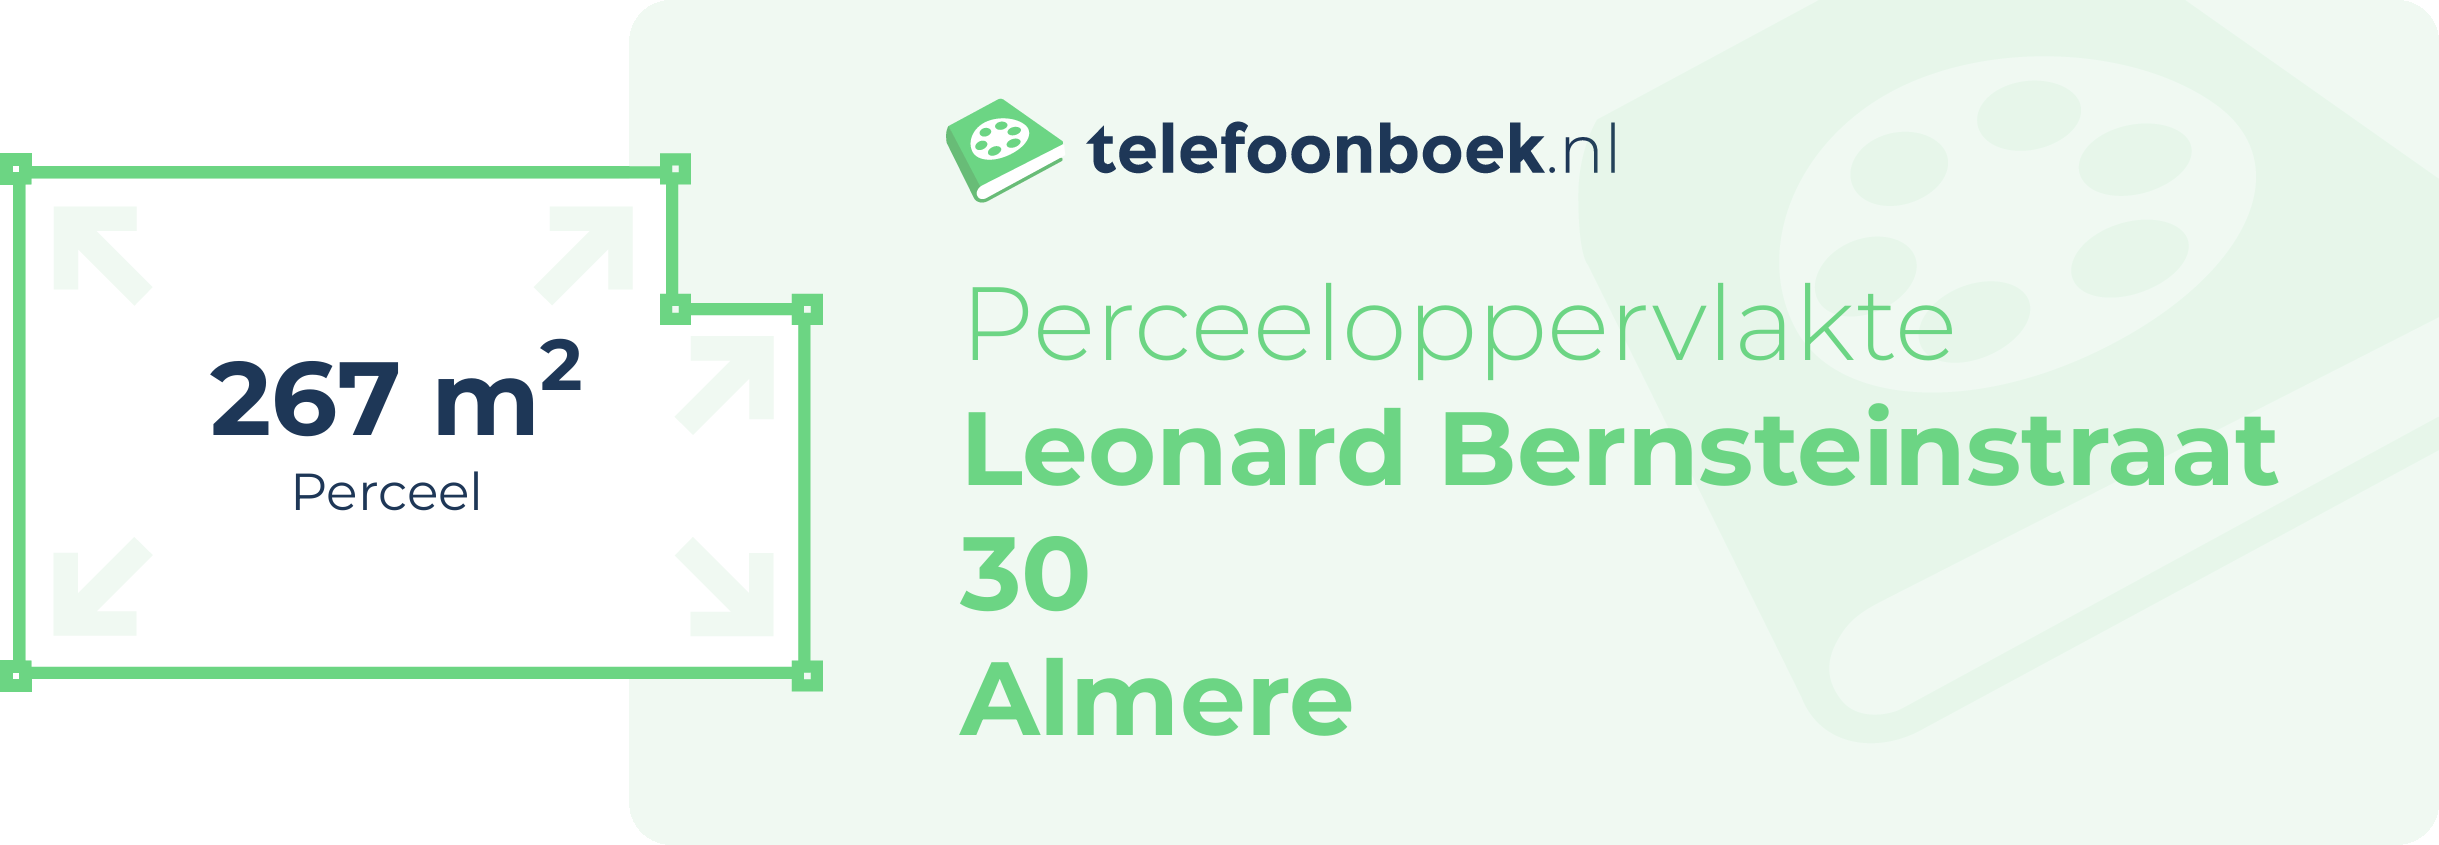 Perceeloppervlakte Leonard Bernsteinstraat 30 Almere